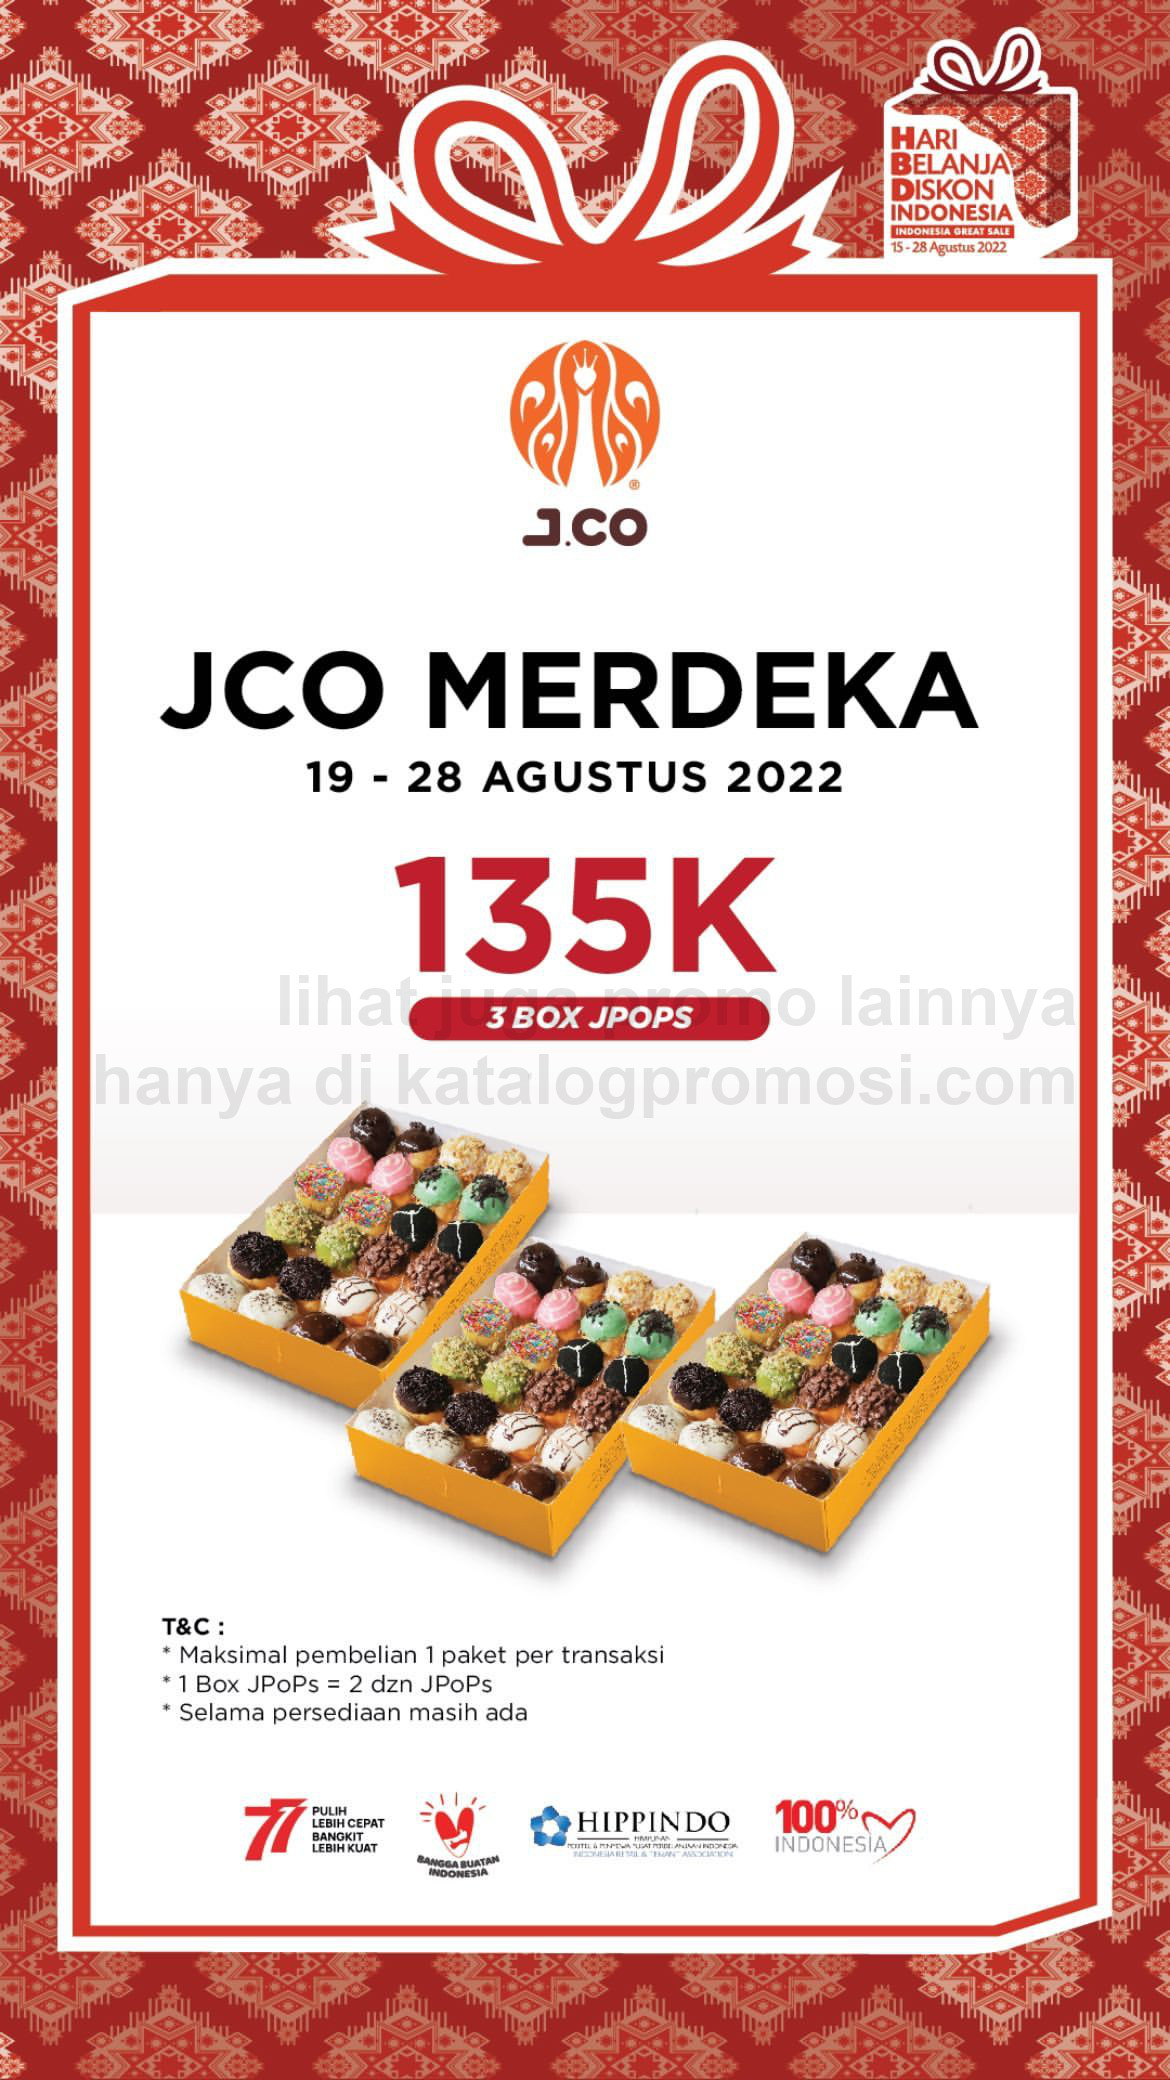 PROMO JCO MERDEKA Weekly Promotion - PAKET 3 BOX JPOPS hanya Rp. 135RIBU